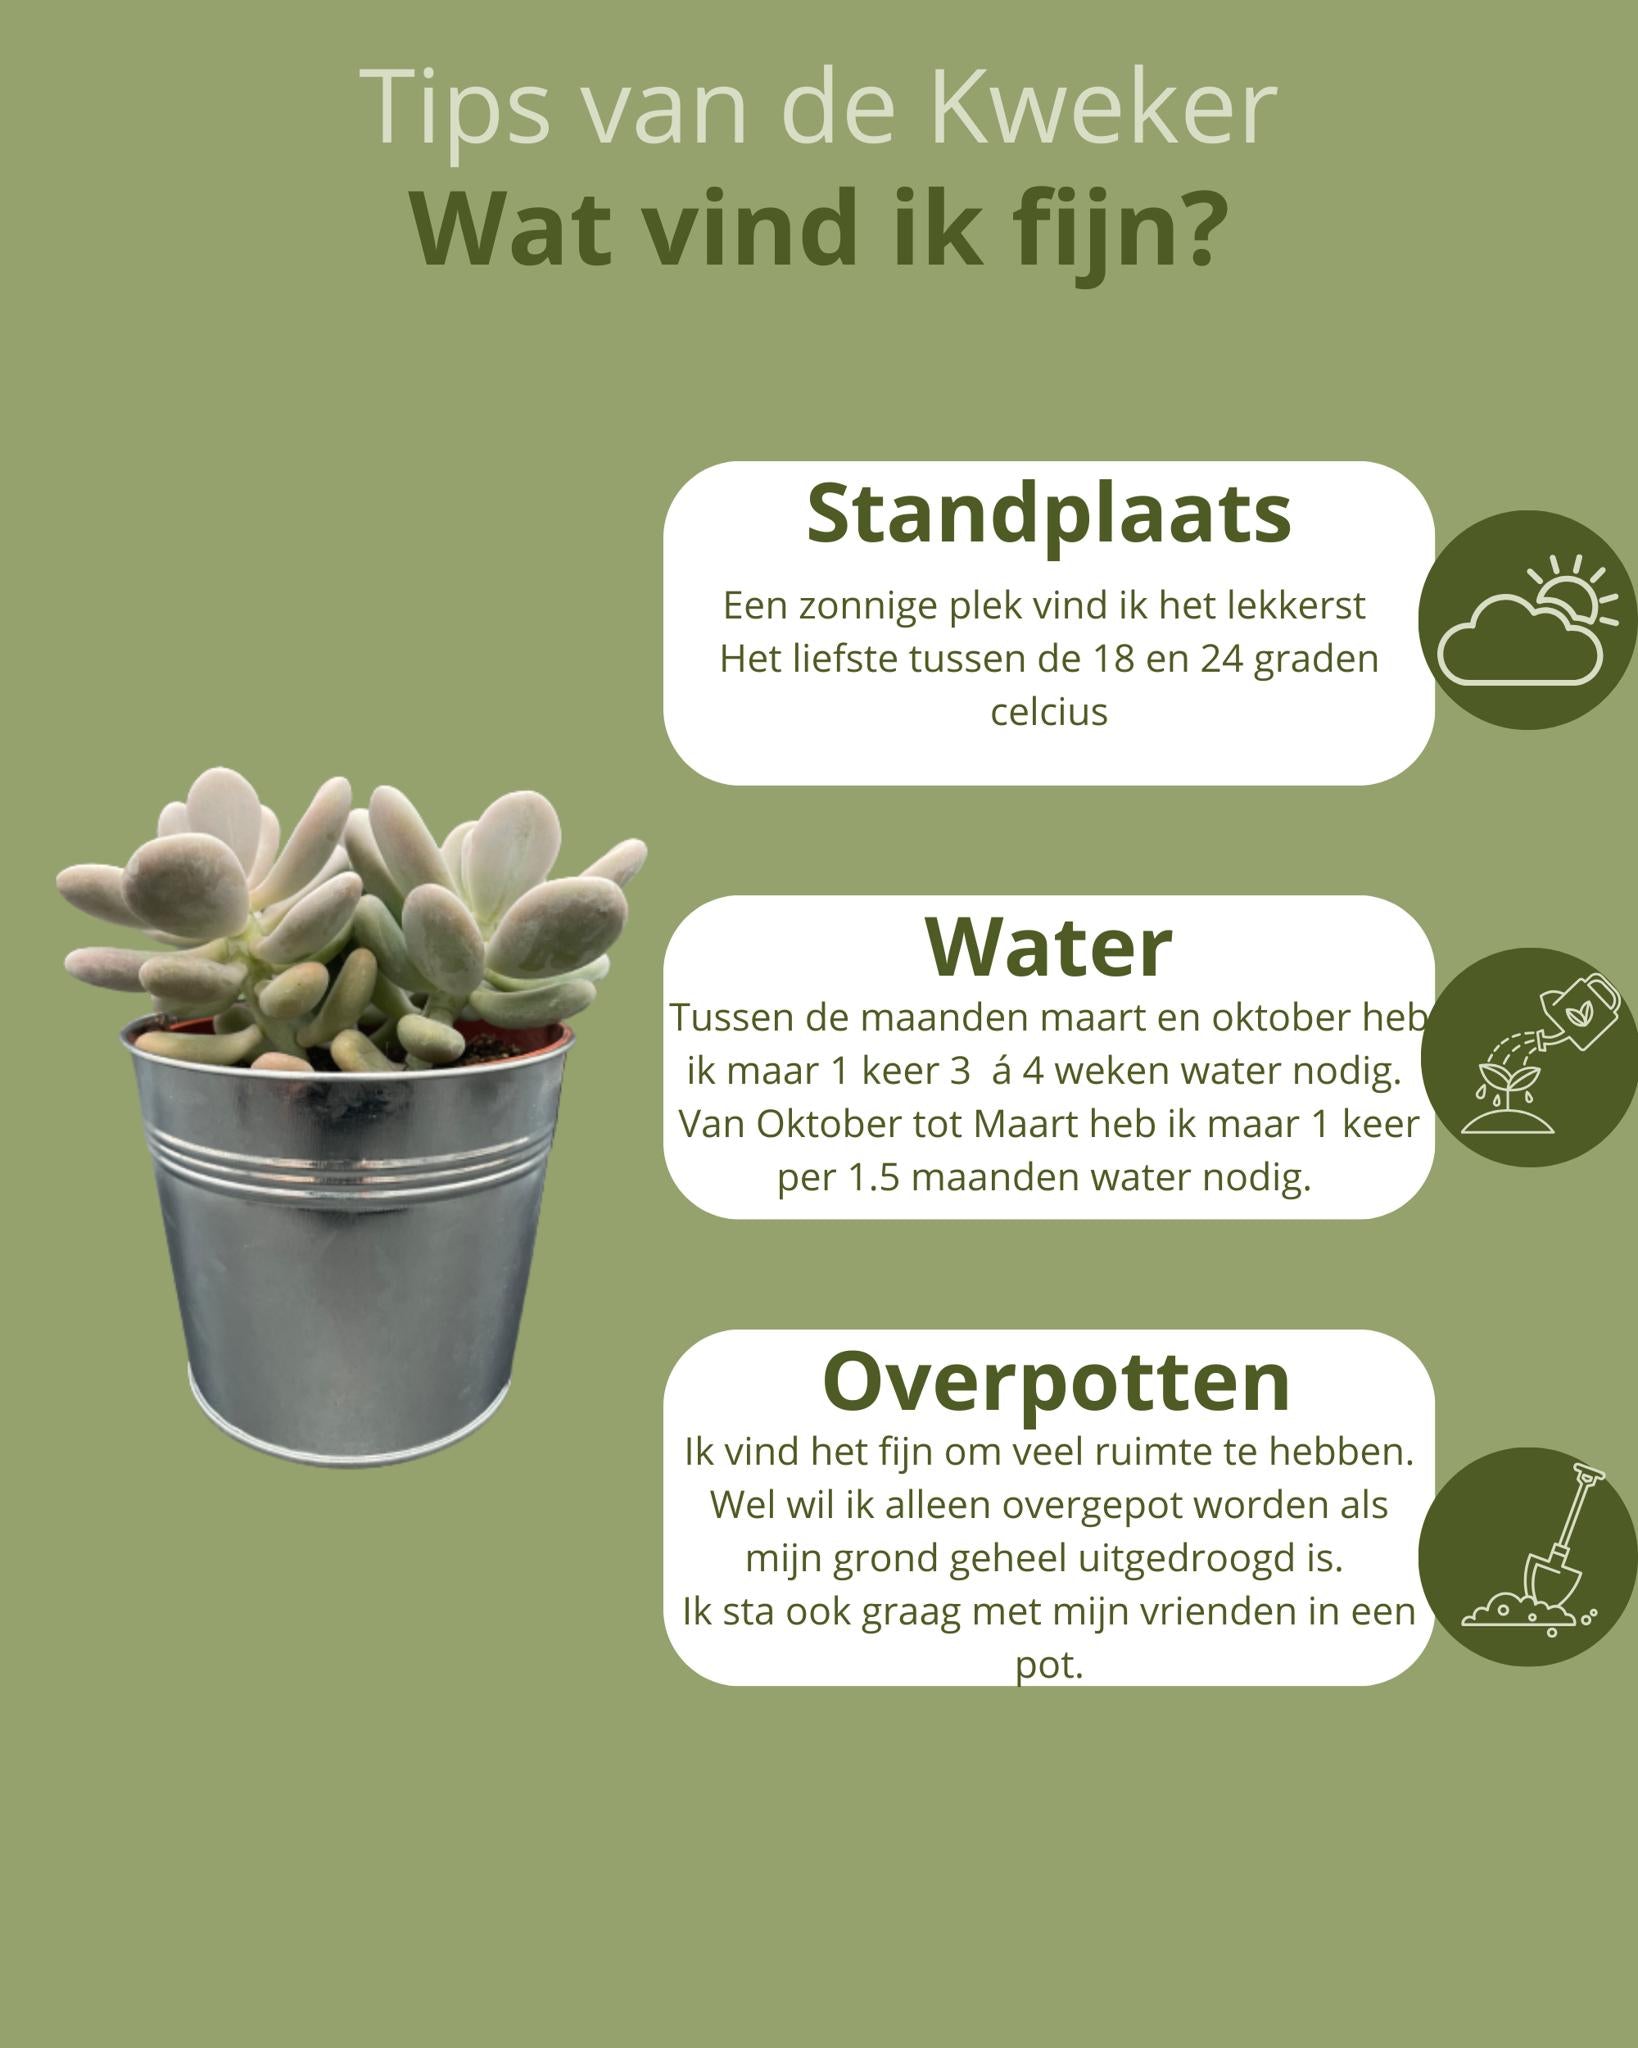 Succulenten- Pachyphytum Oviferum - ↕15-20cm (3 Stuks) - Zinc - Ø13 cm - Gadthat.nl